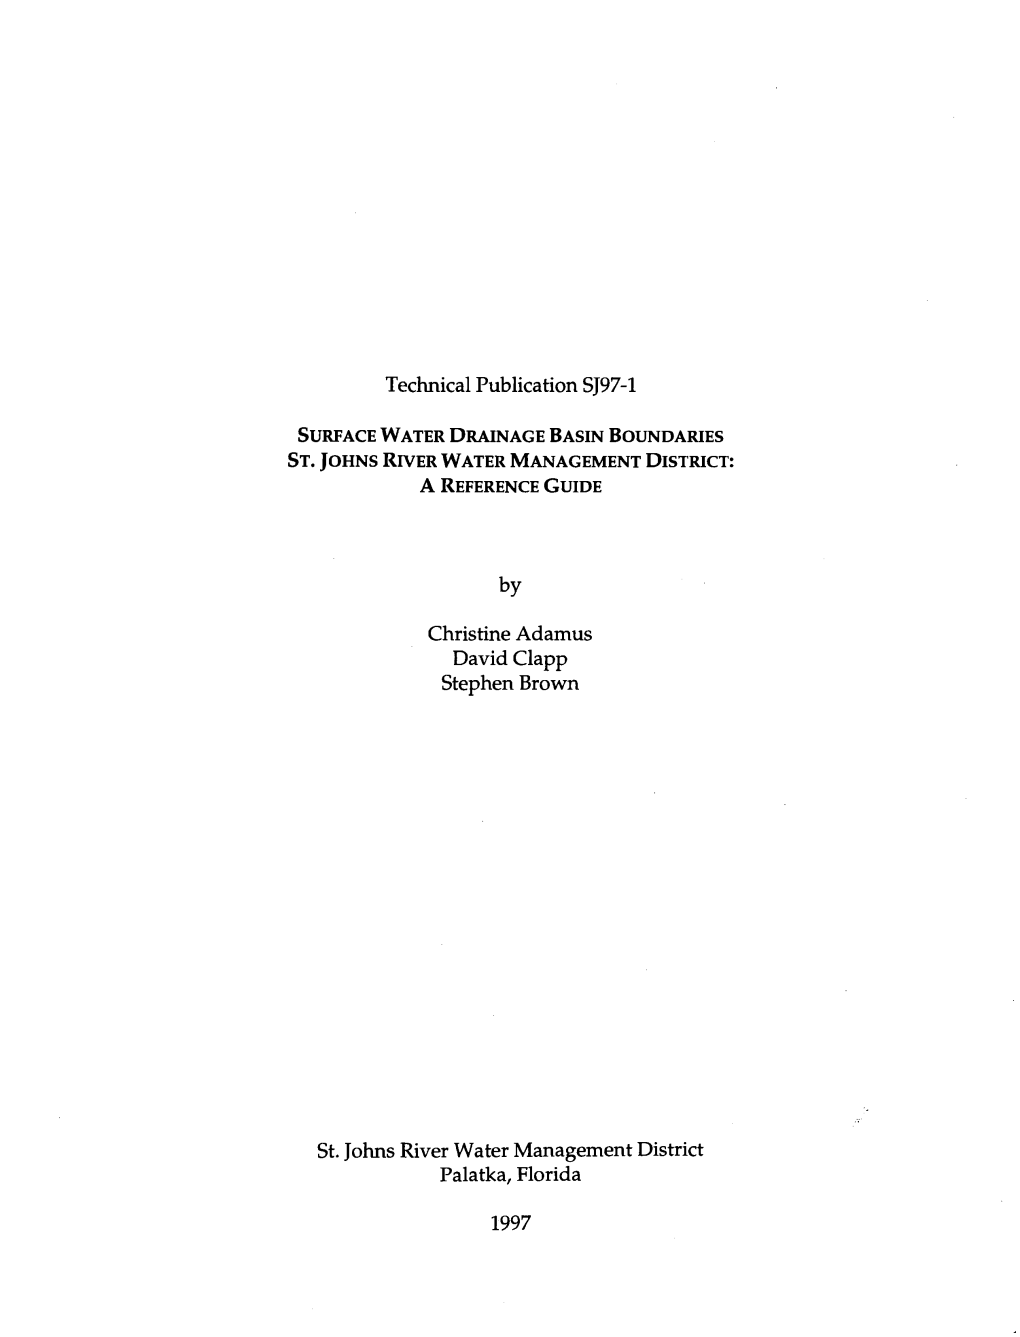 Technical Publication SJ97-1 by Christine Adamus David Clapp Stephen Brown St. Johns River Water Management District Palatka, Fl